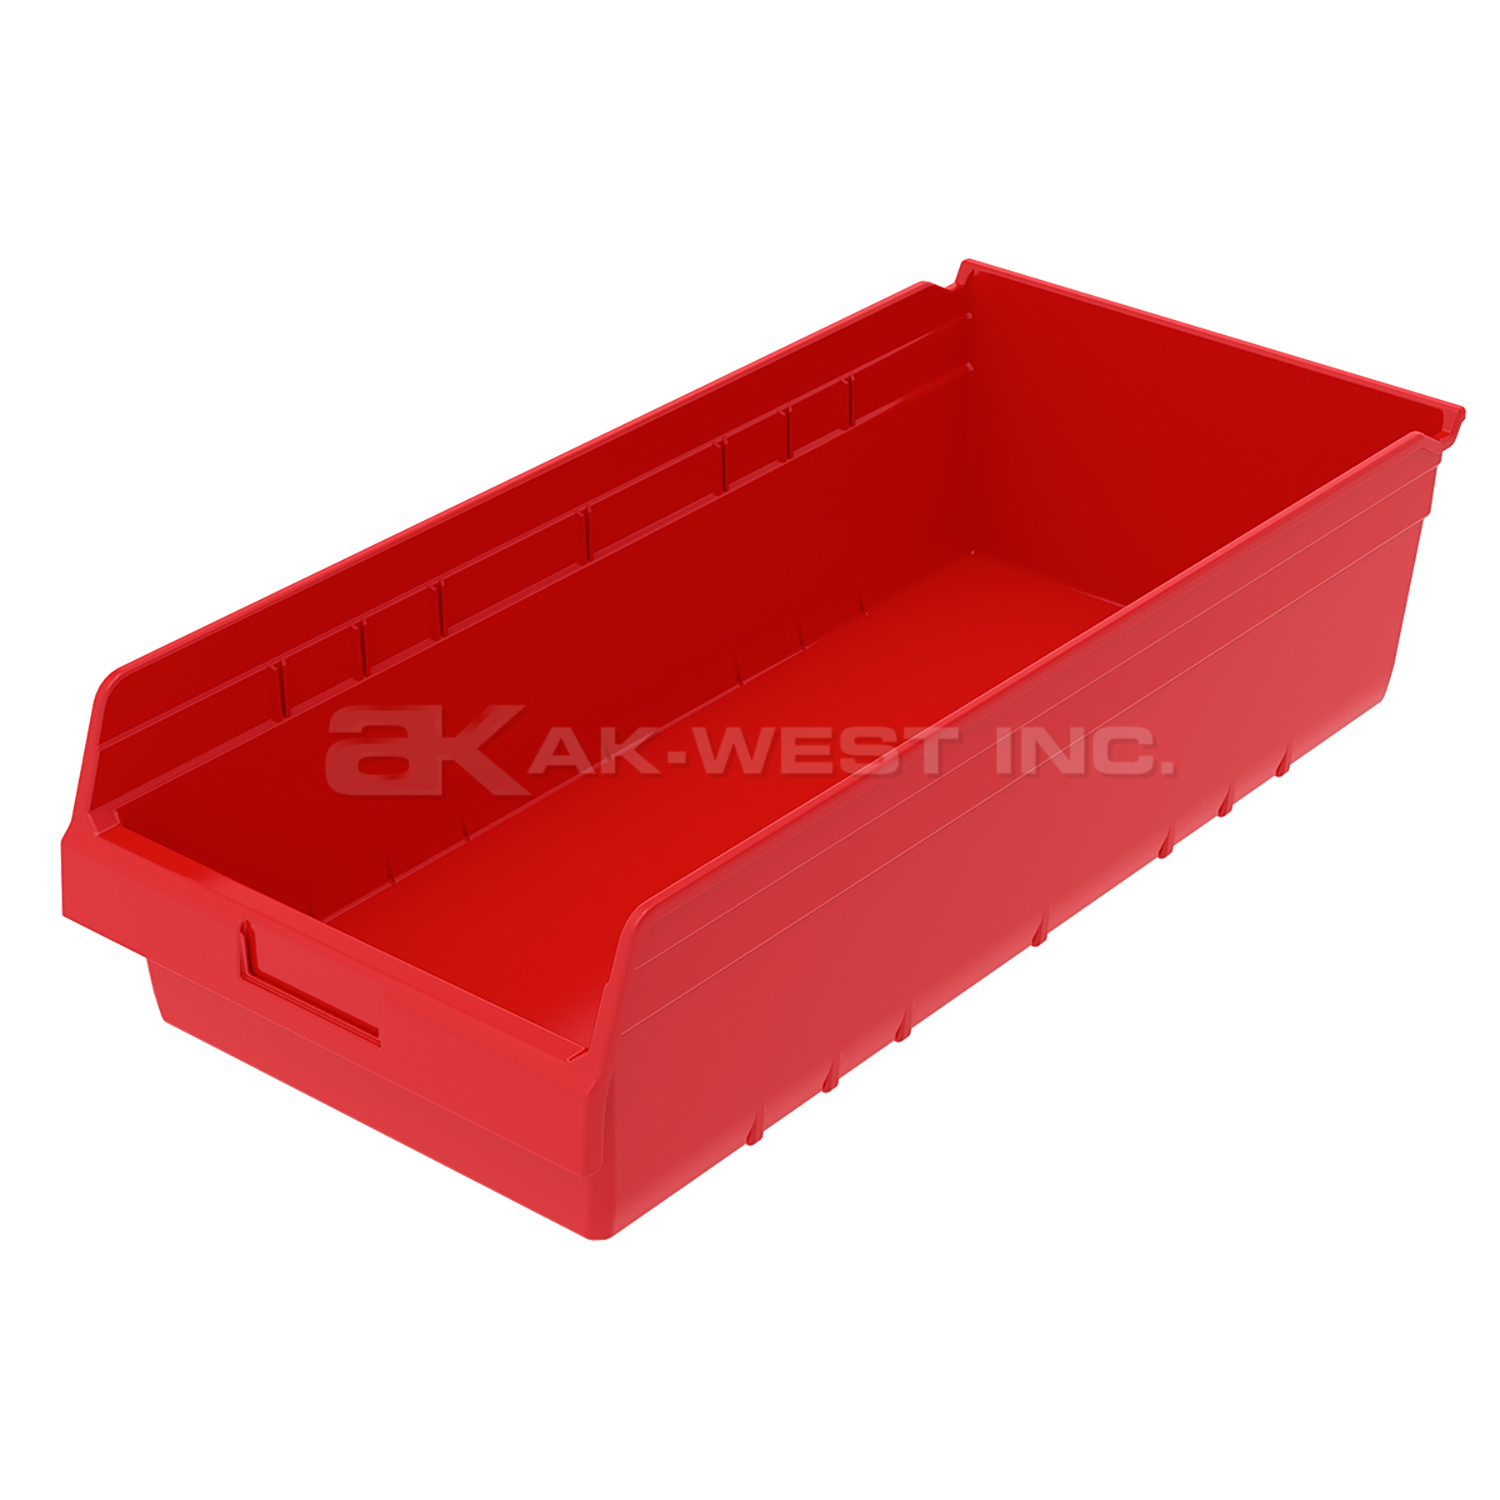 Red, 23-5/8" x 11-1/8" x 6" Shelf Bin (6 Per Carton)